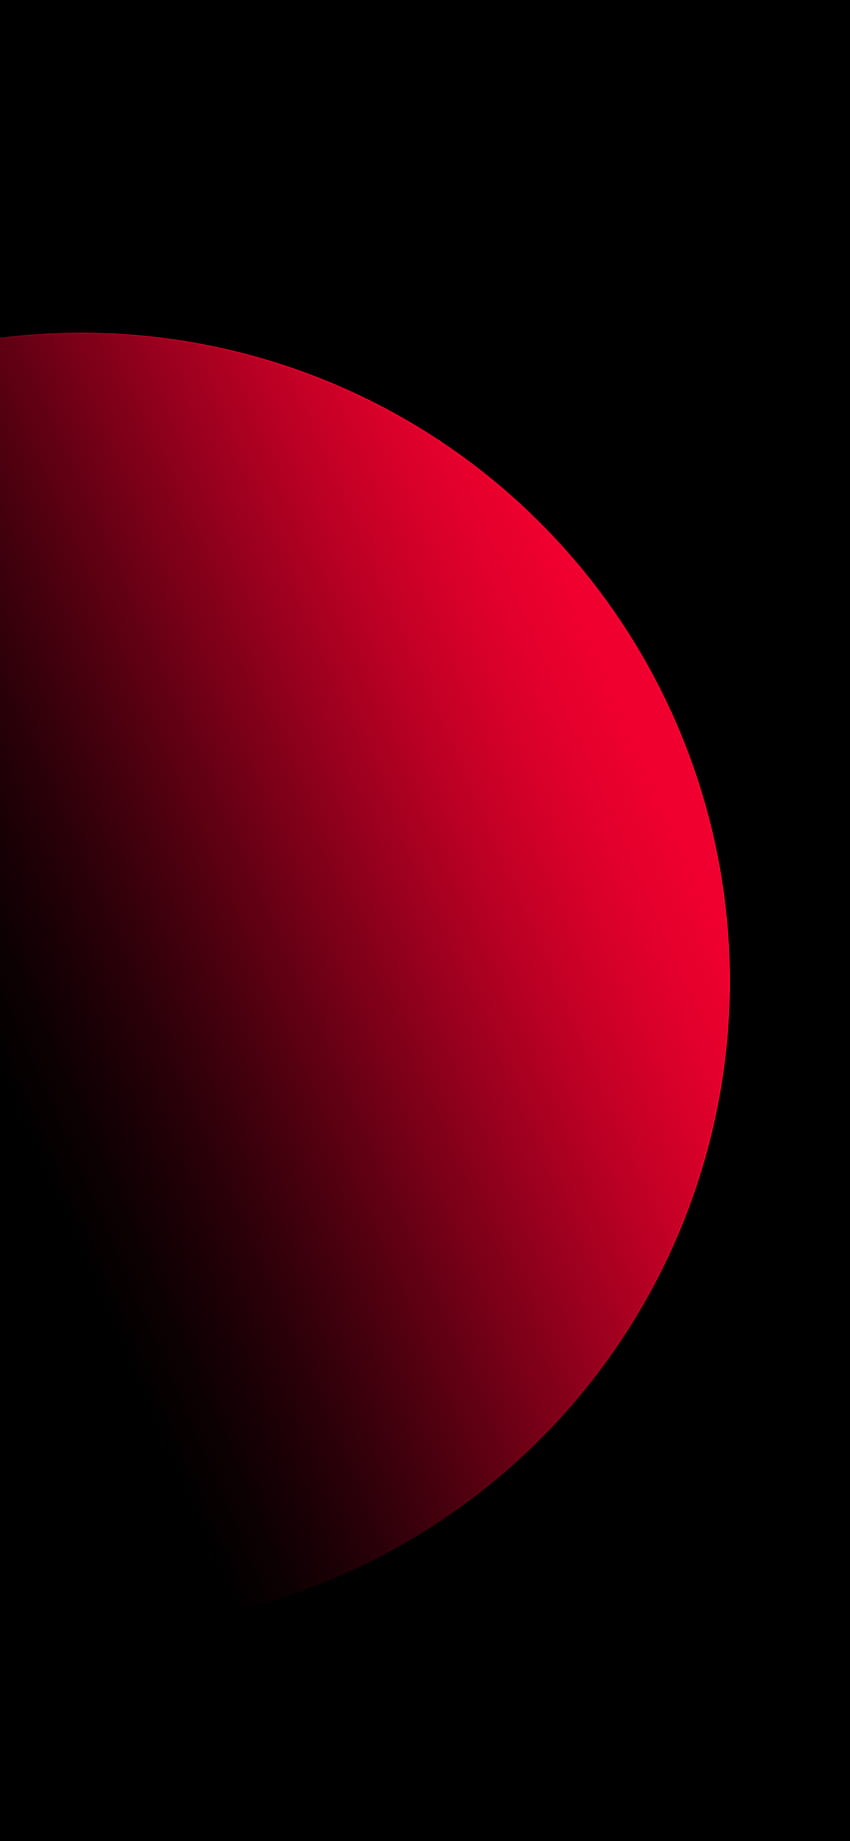 Merah, hitam, minimalis, bulat, imajinasi, wahyu, tenang, berpikir, bijaksana, visualisasi,. Абстрактное, Обои для iphone, Обои для PHONE wallpaper ponsel HD